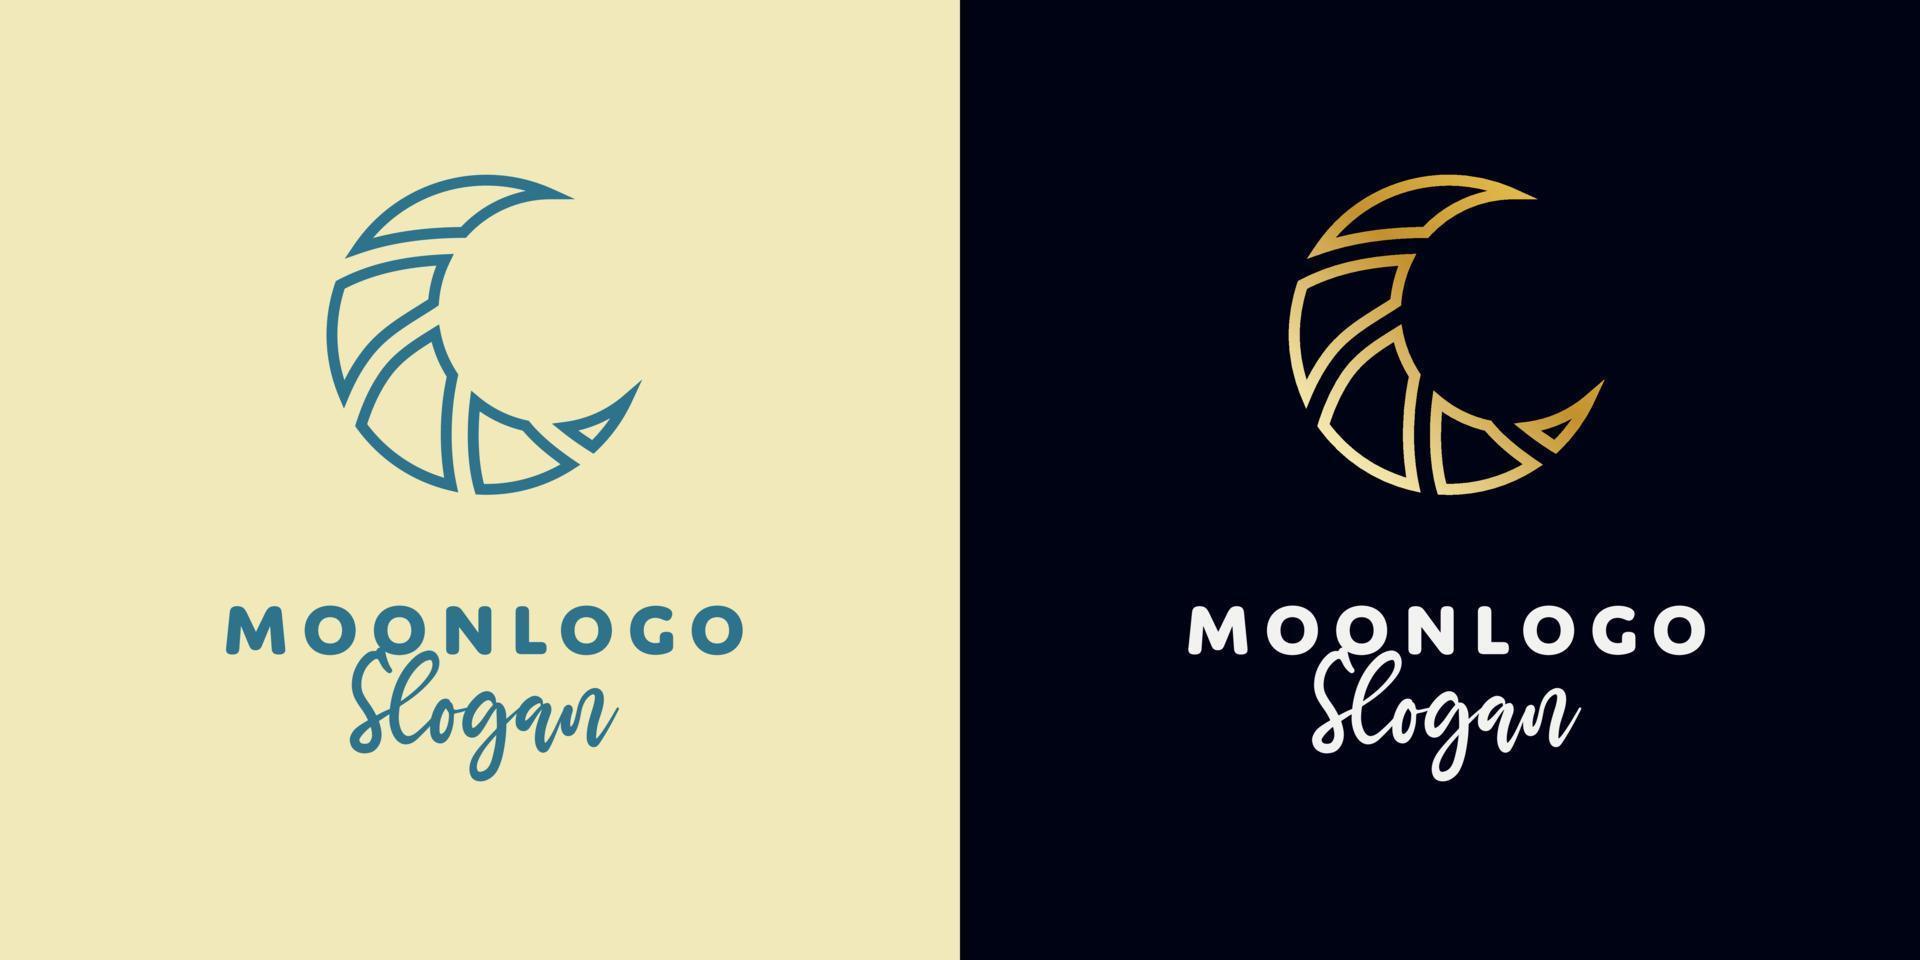 Elegant crescent moon logo design. Abstract style illustration for background, cover, banner. Ramadan Kareem vector